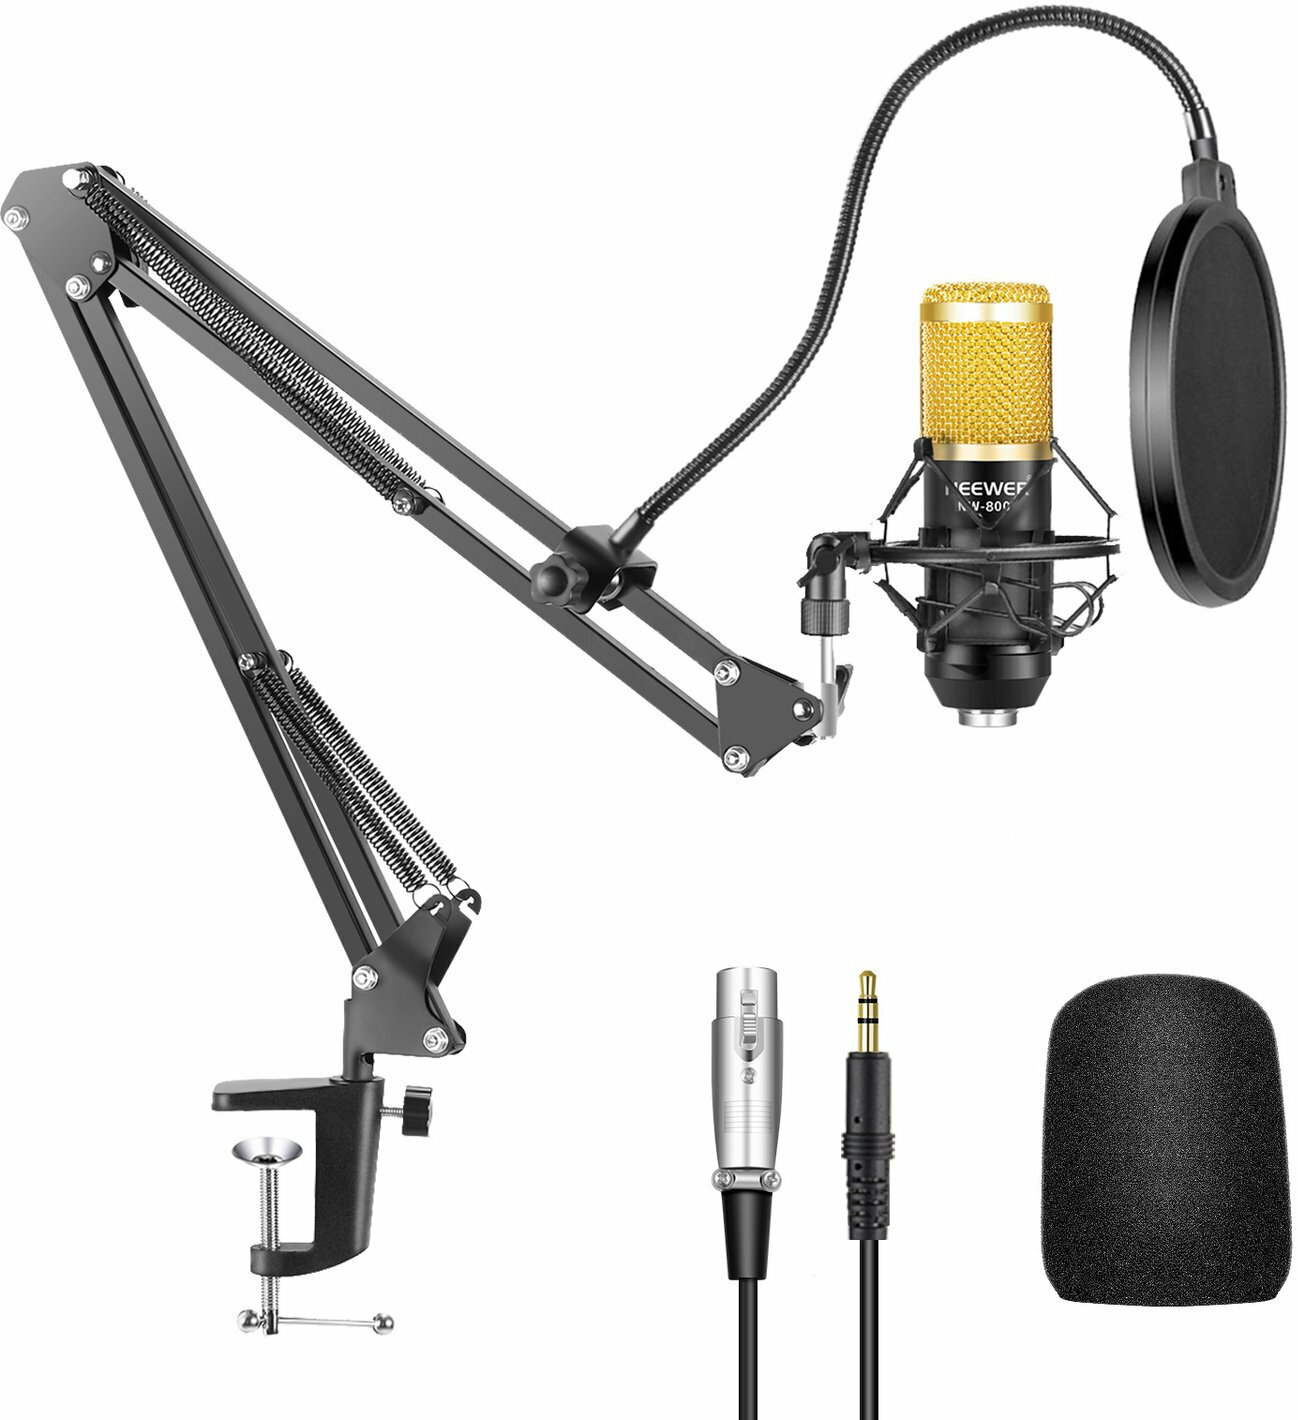 Kondenzatorski studijski mikrofon Neewer NW-800 6in1 Kondenzatorski studijski mikrofon